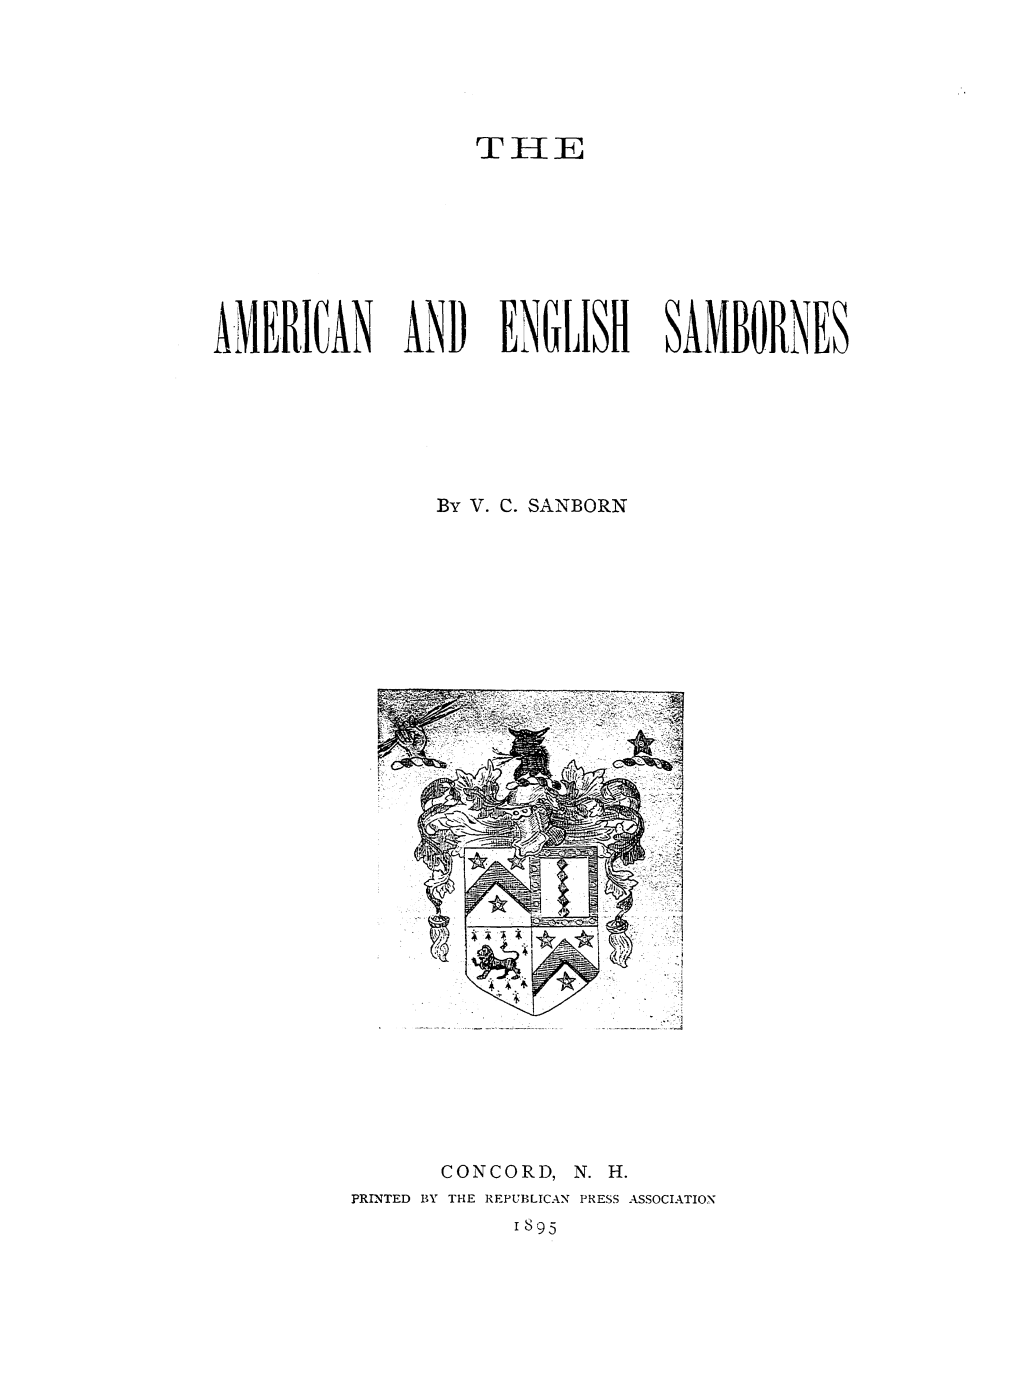 American and English Sambornes